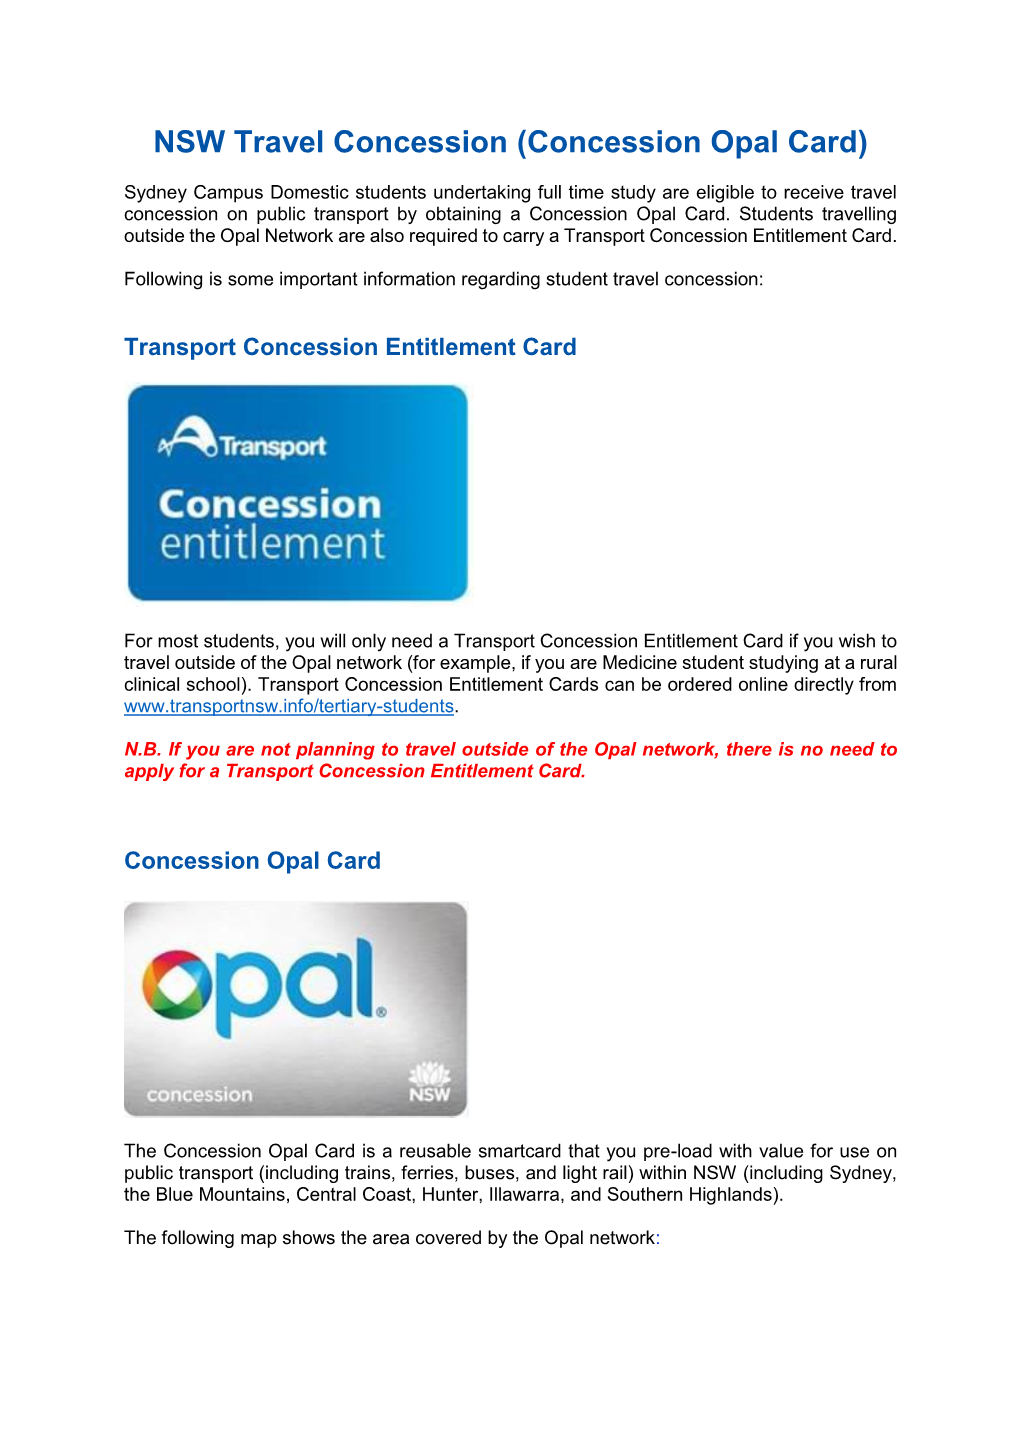 Concession Opal Card)